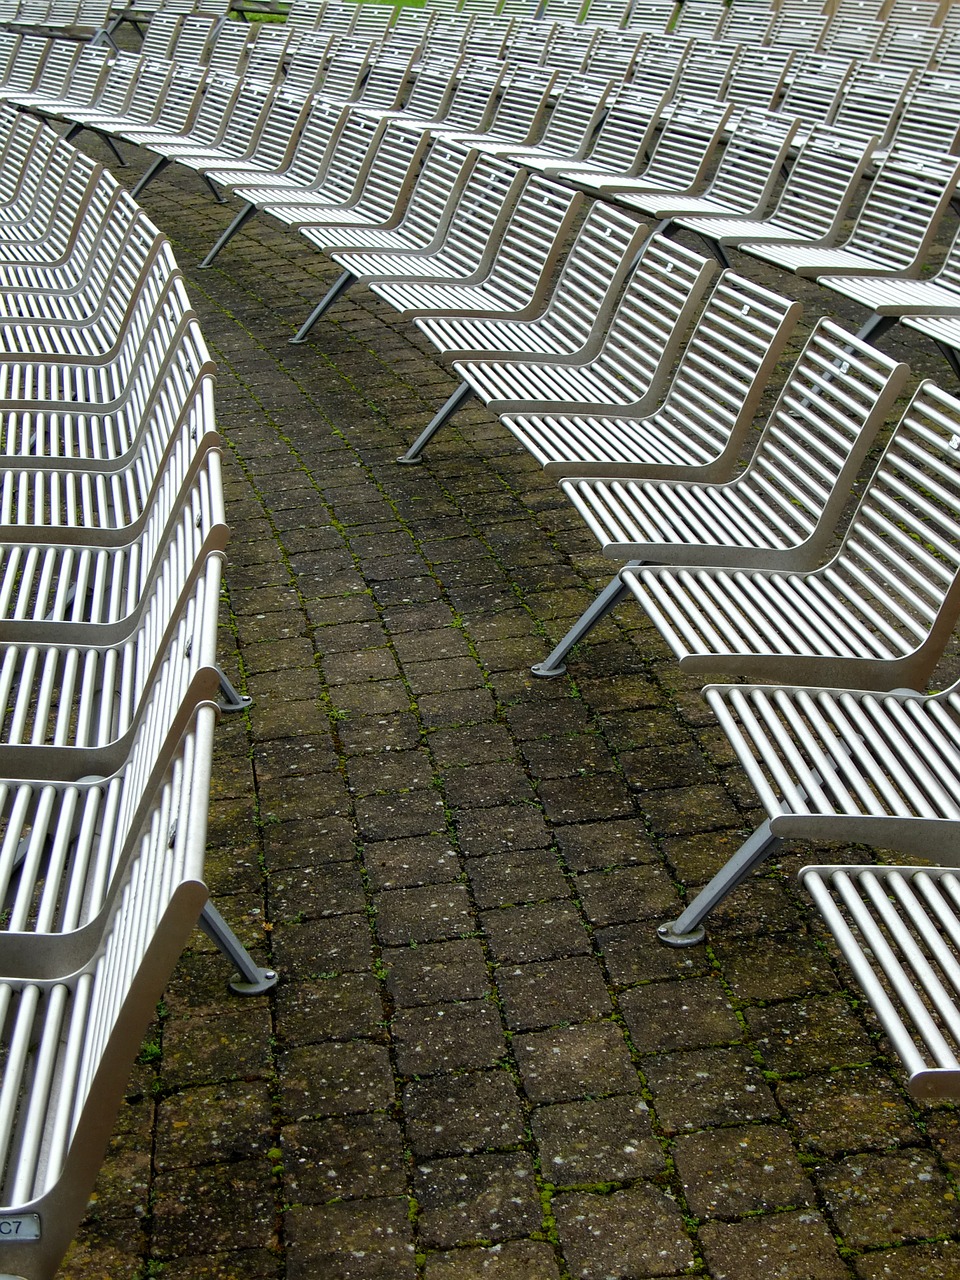 sit rows of seats auditorium free photo